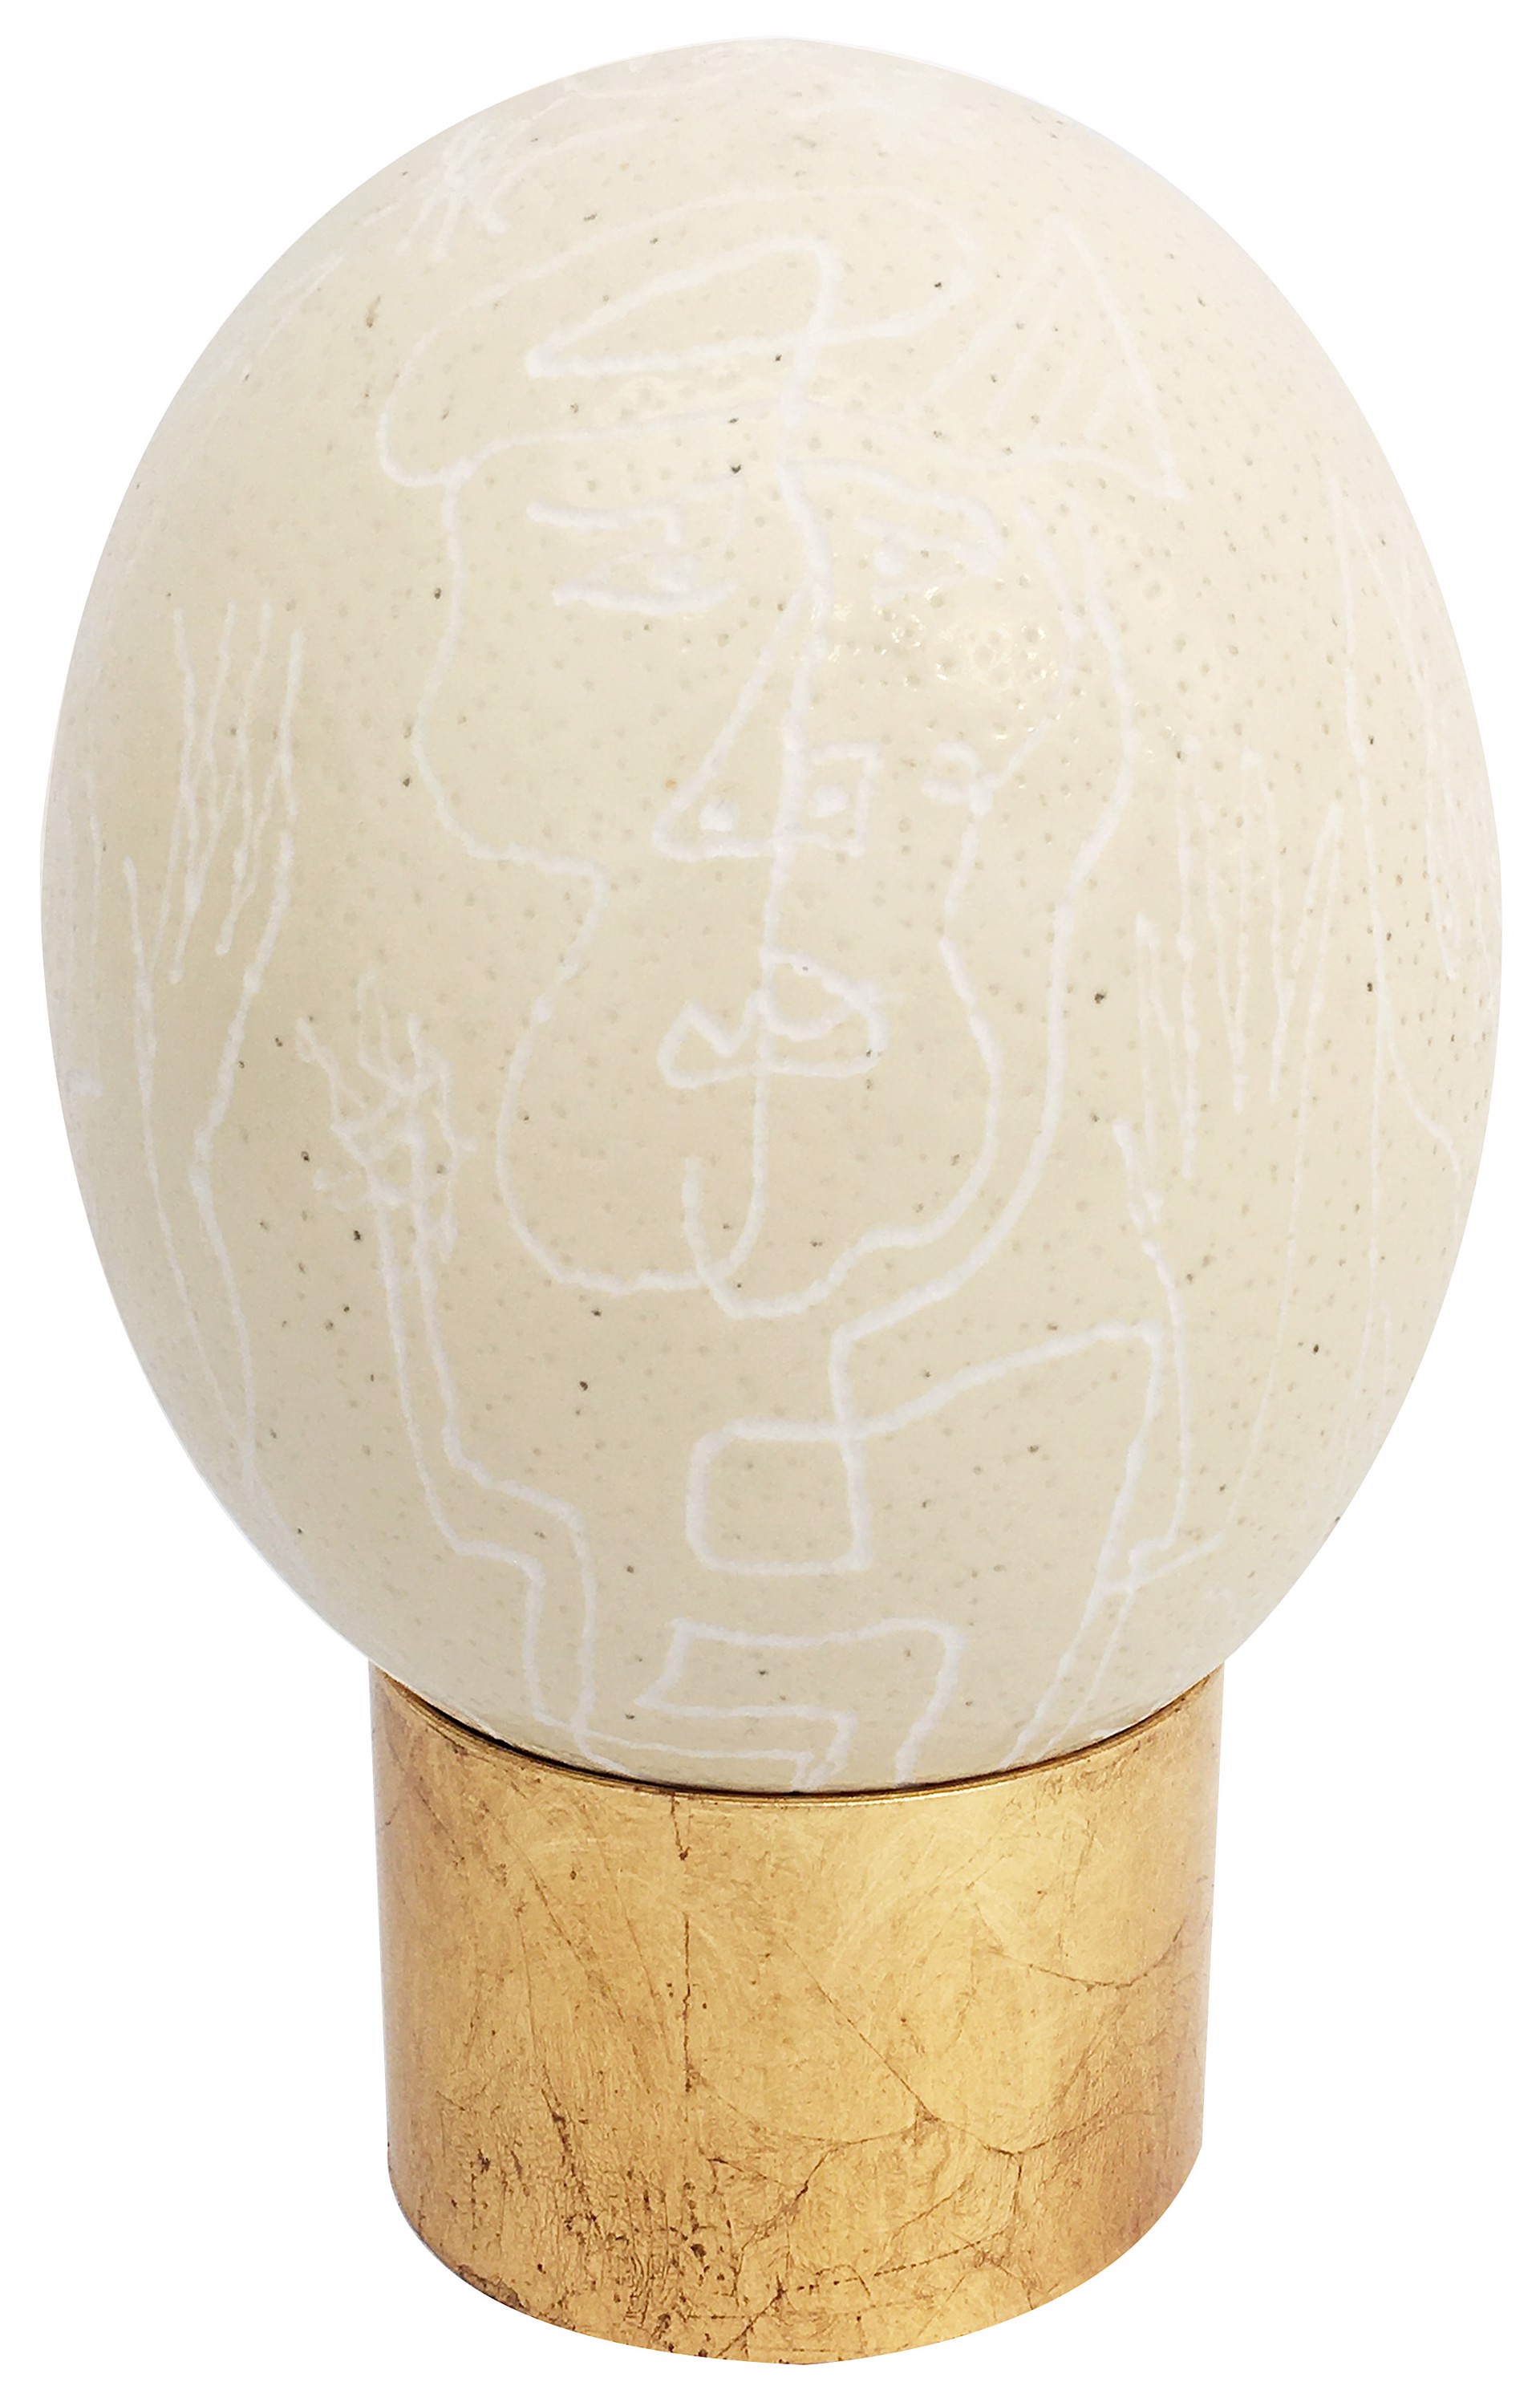 Ostrich Egg by Alejandro Santiago